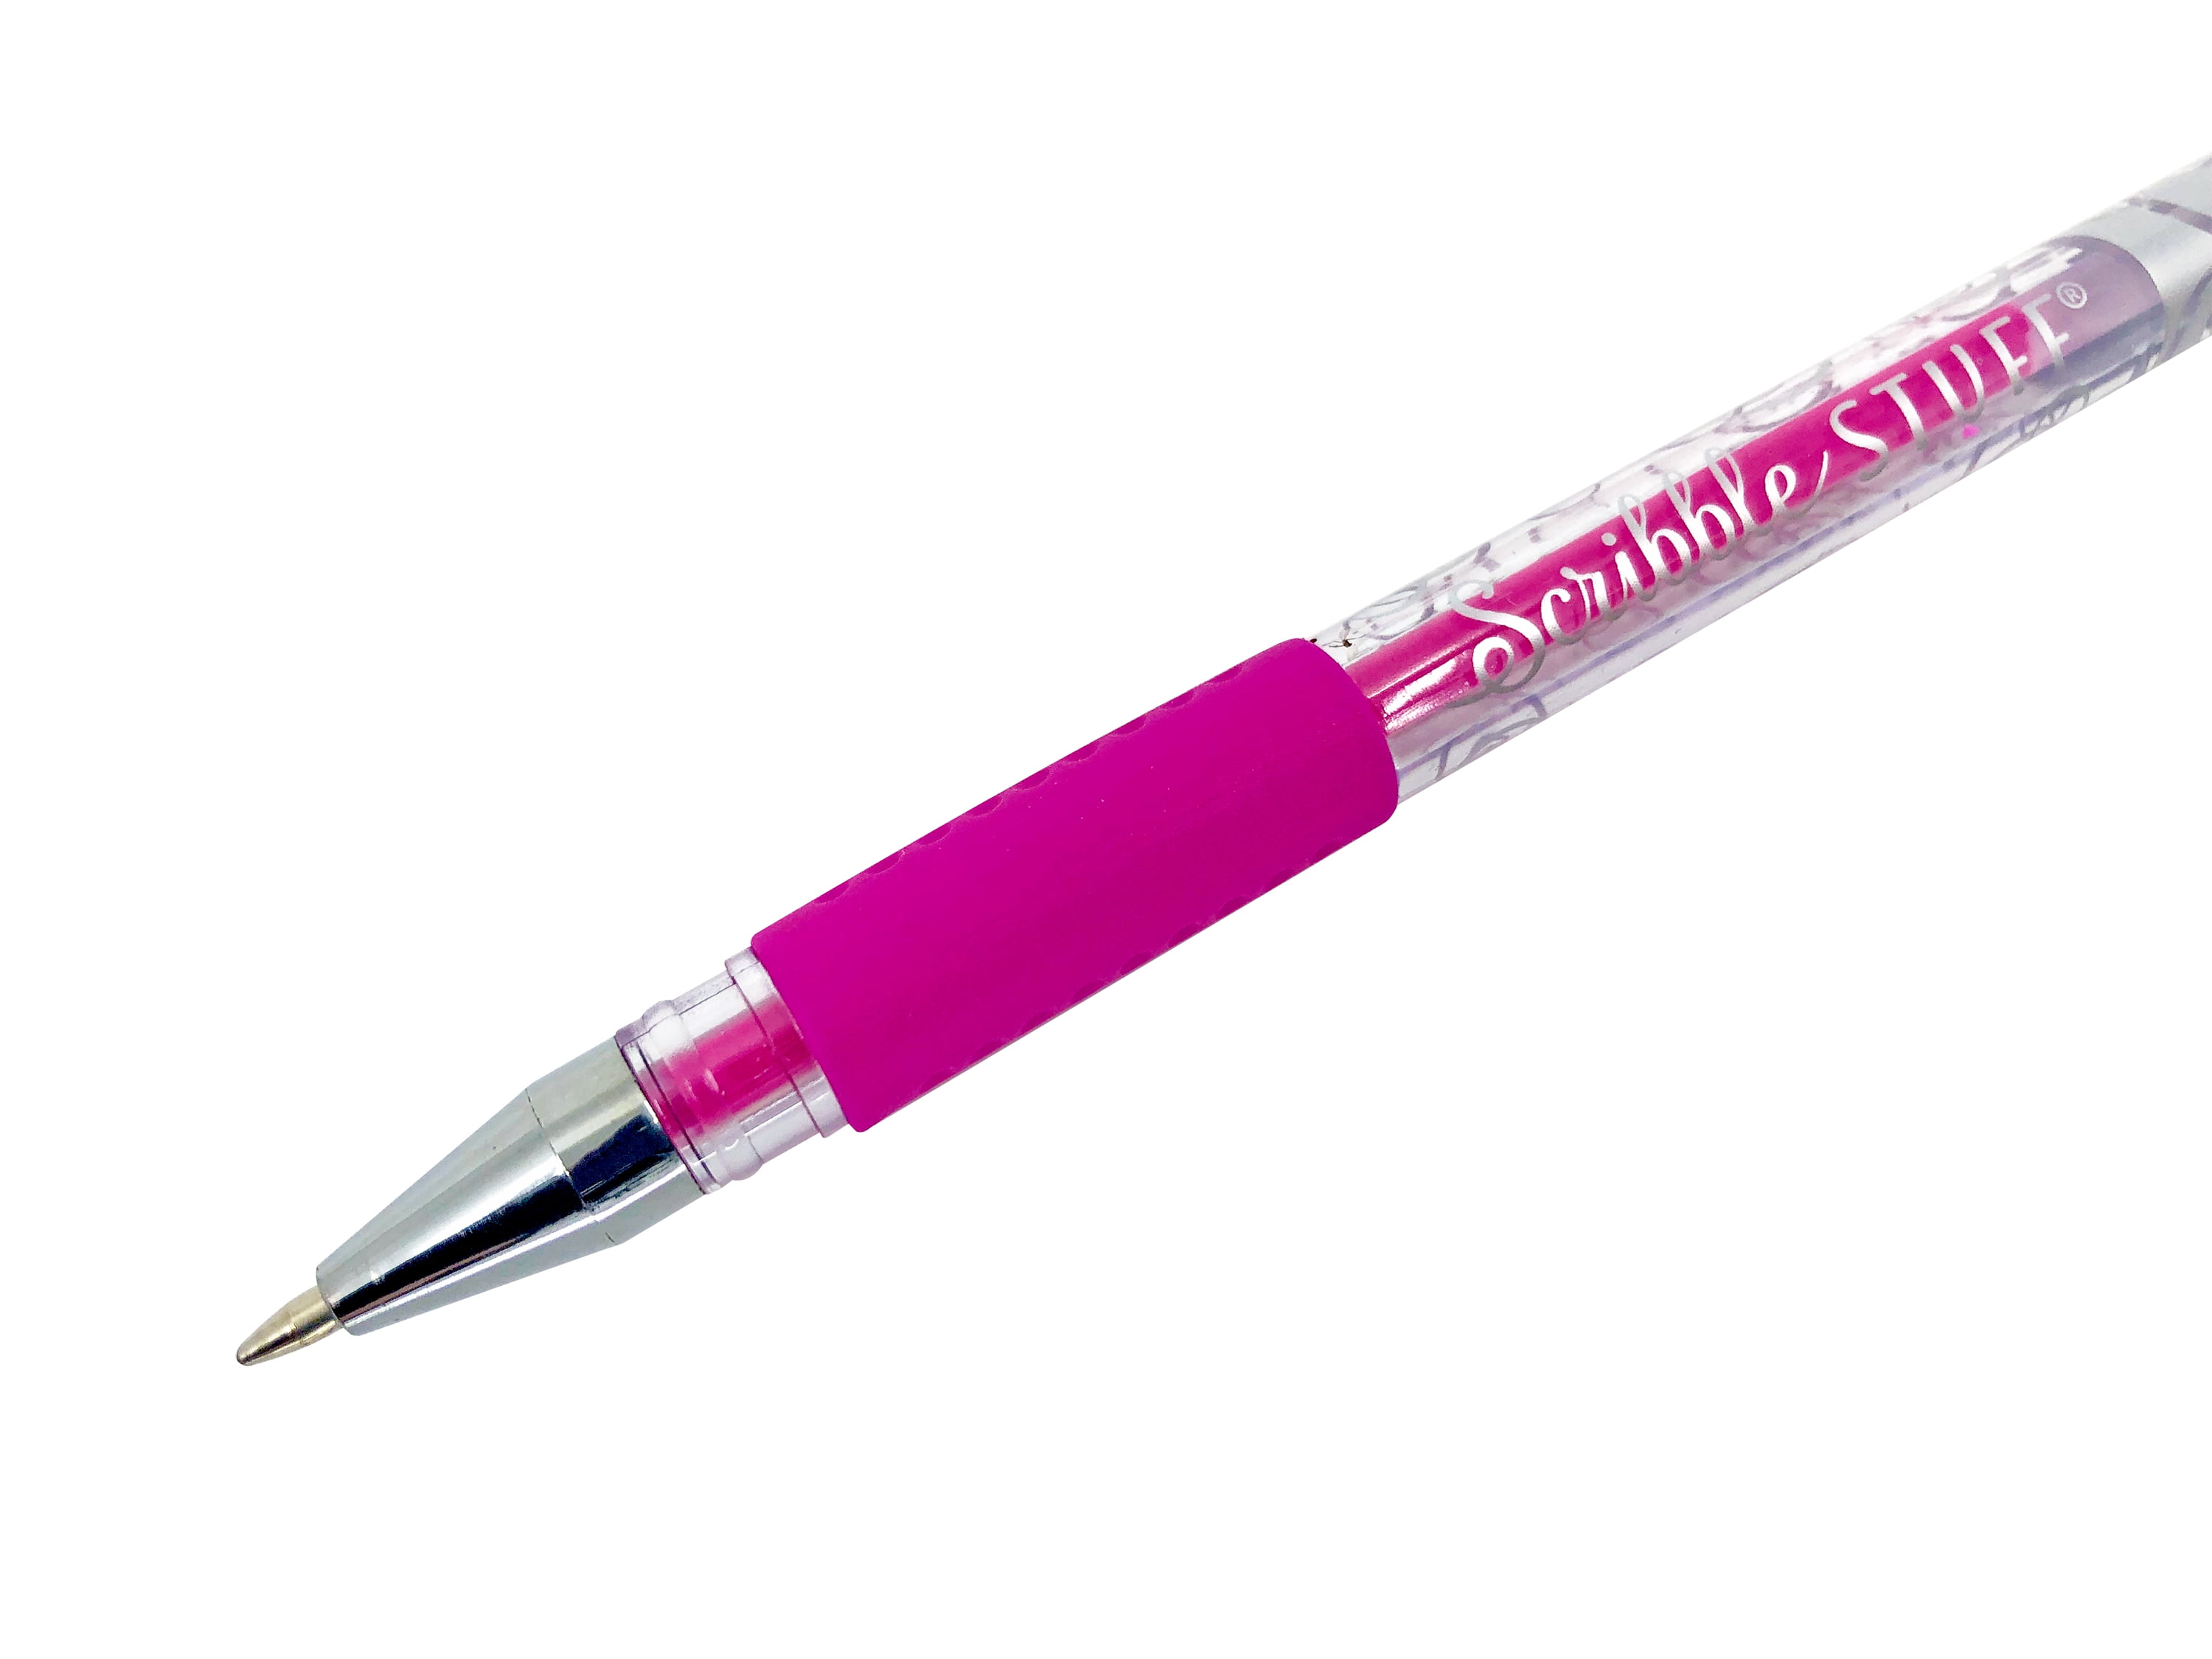 Glitter Gel Pens, 32-Color Neon Pens Fine 32 Count (Pack of 1), Multi